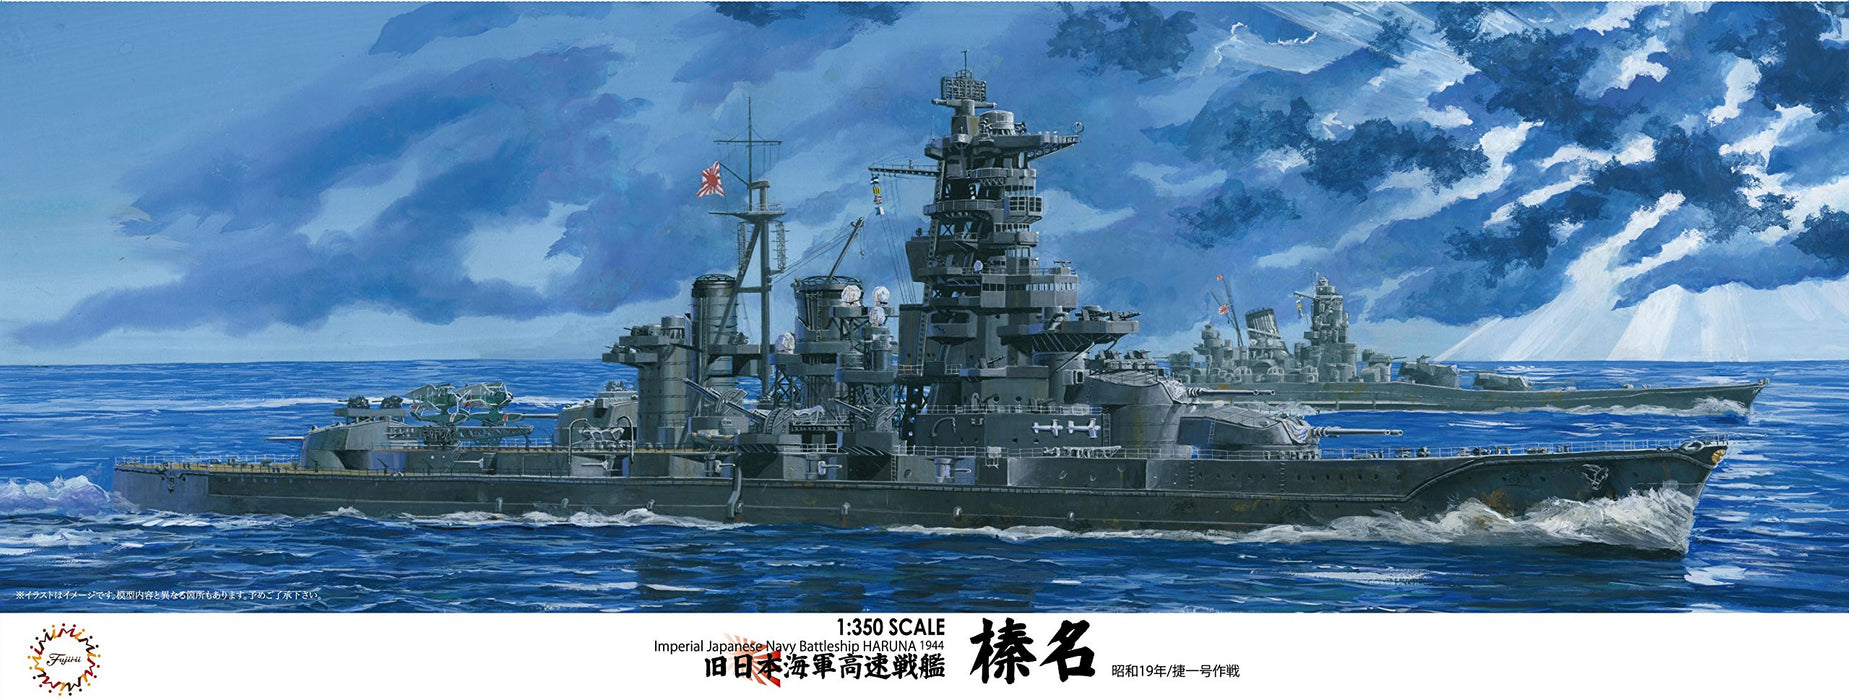 Fujimi 600550 Ijn Battle Ship Haruna 1944 1/350 Japanese Military Ship Model